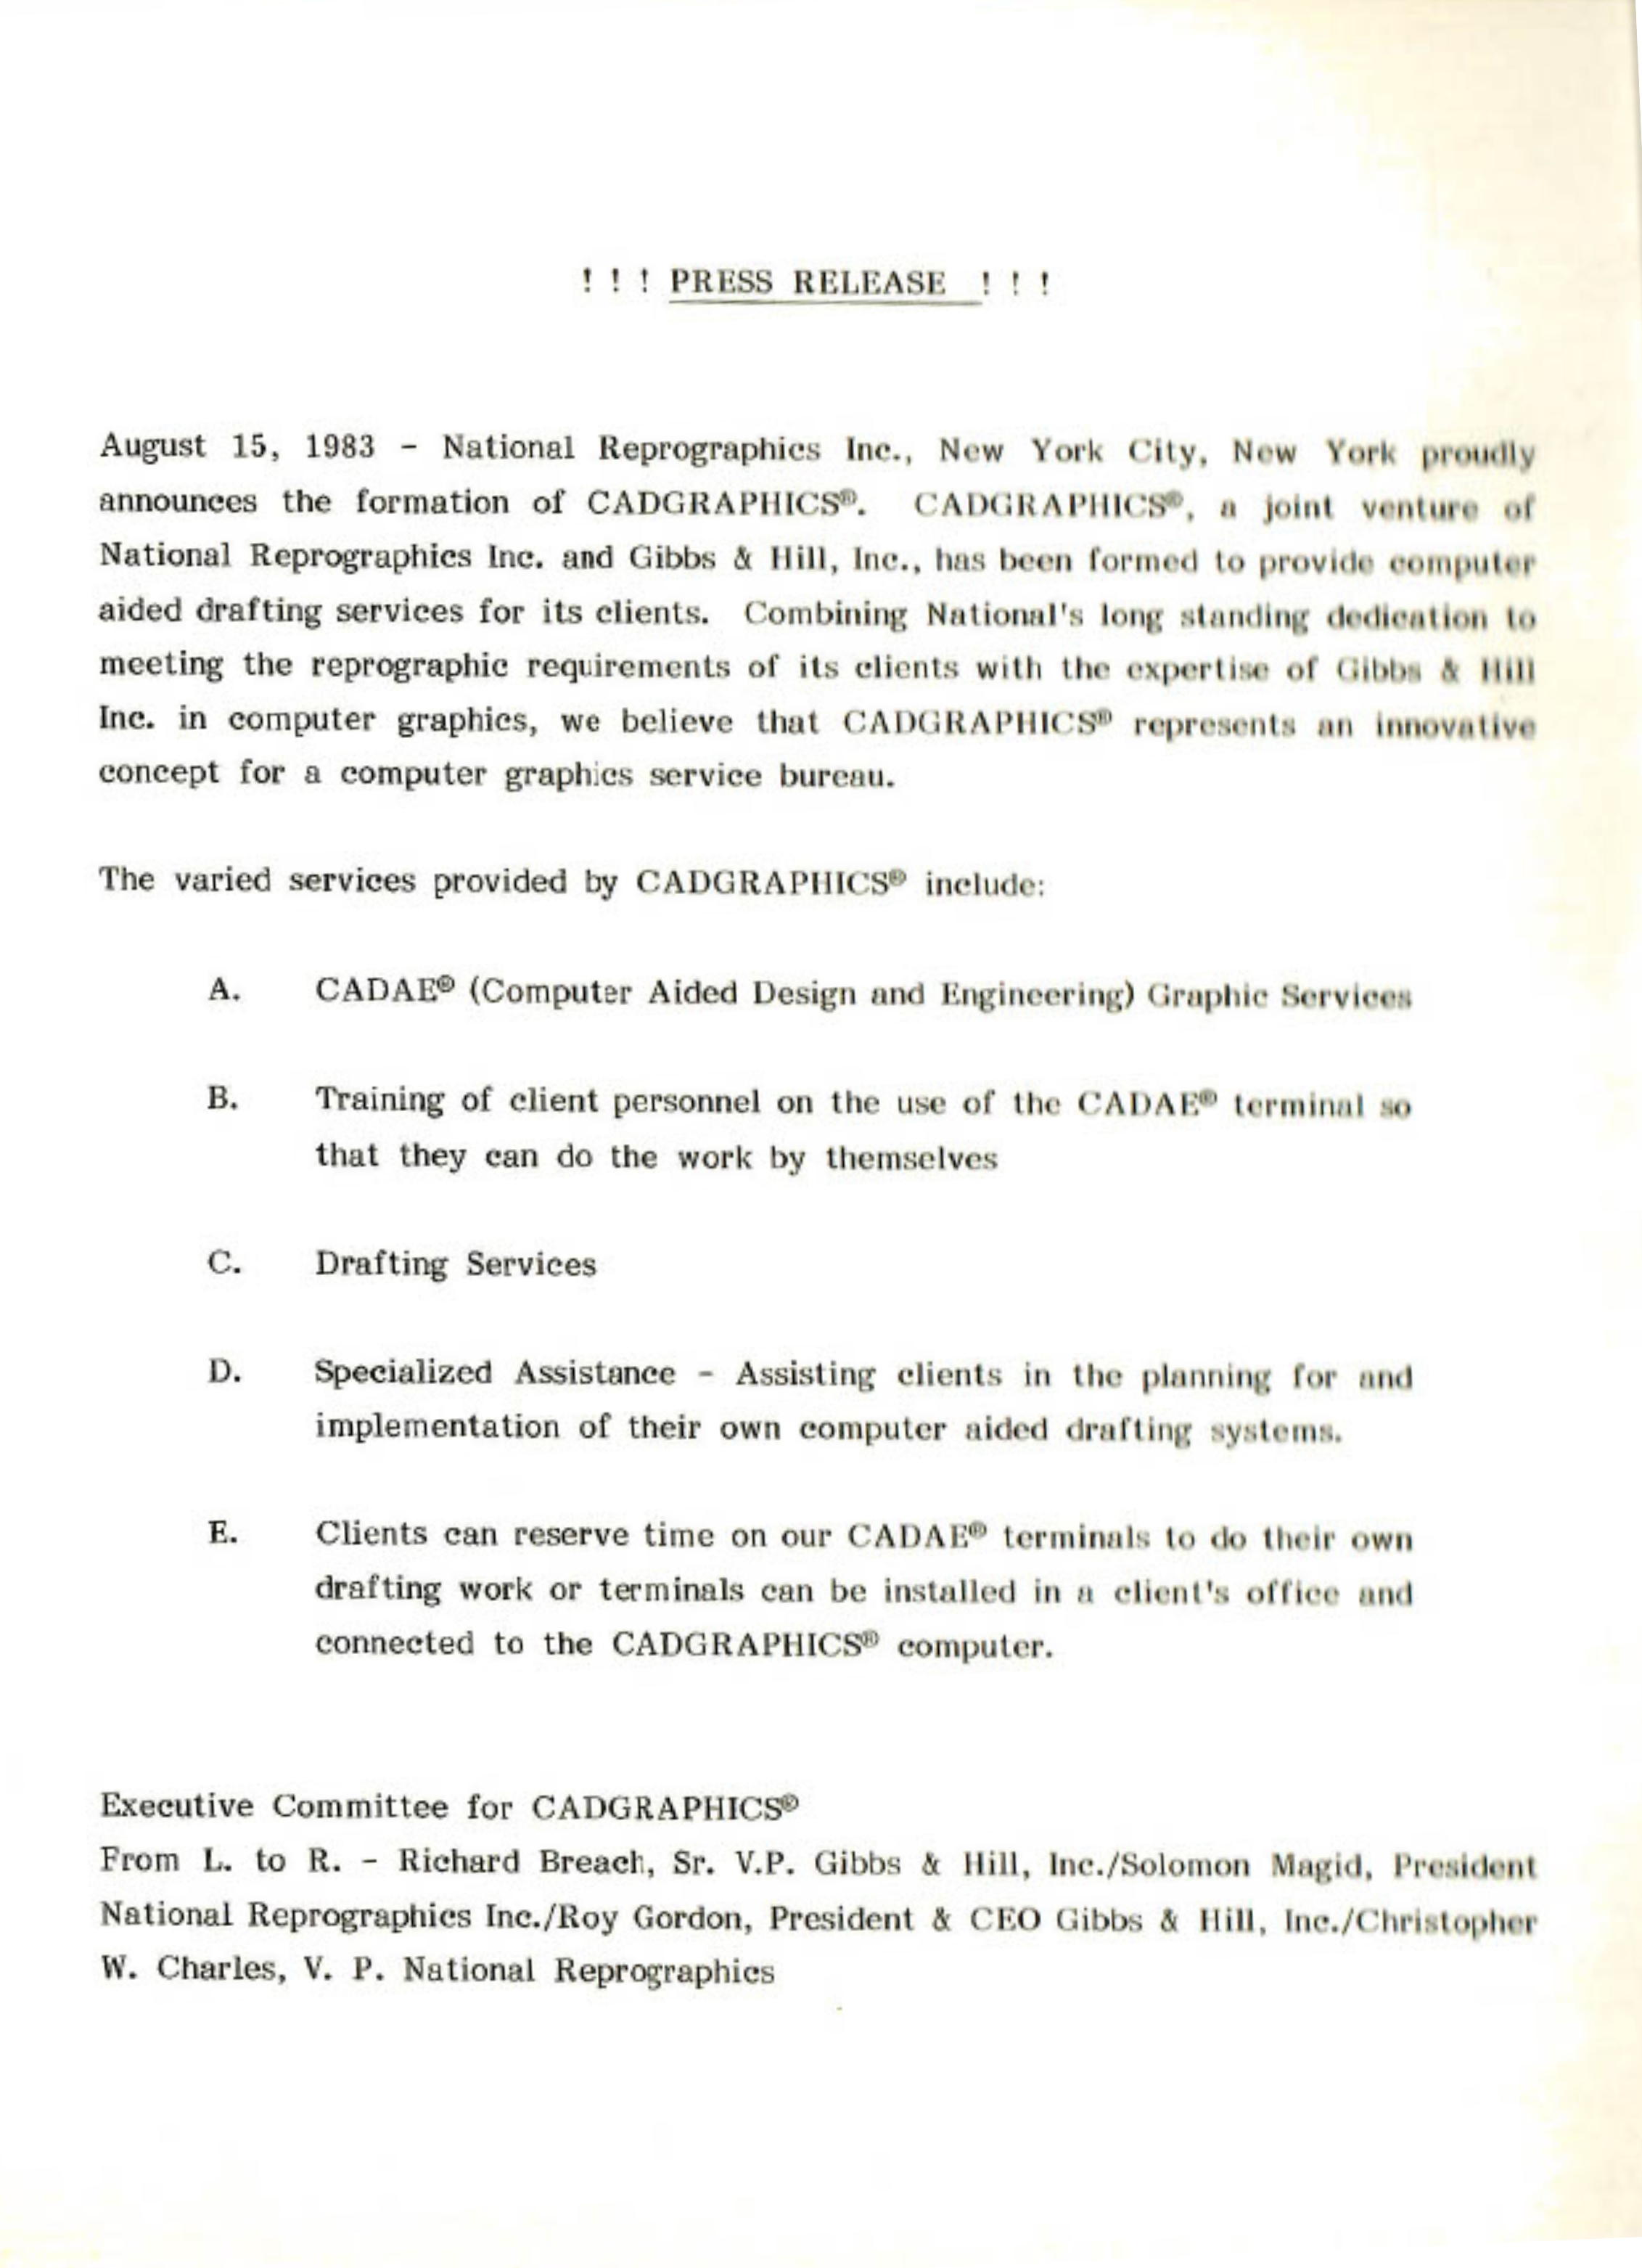 1983 - CADGRAPHICS Press Release-1